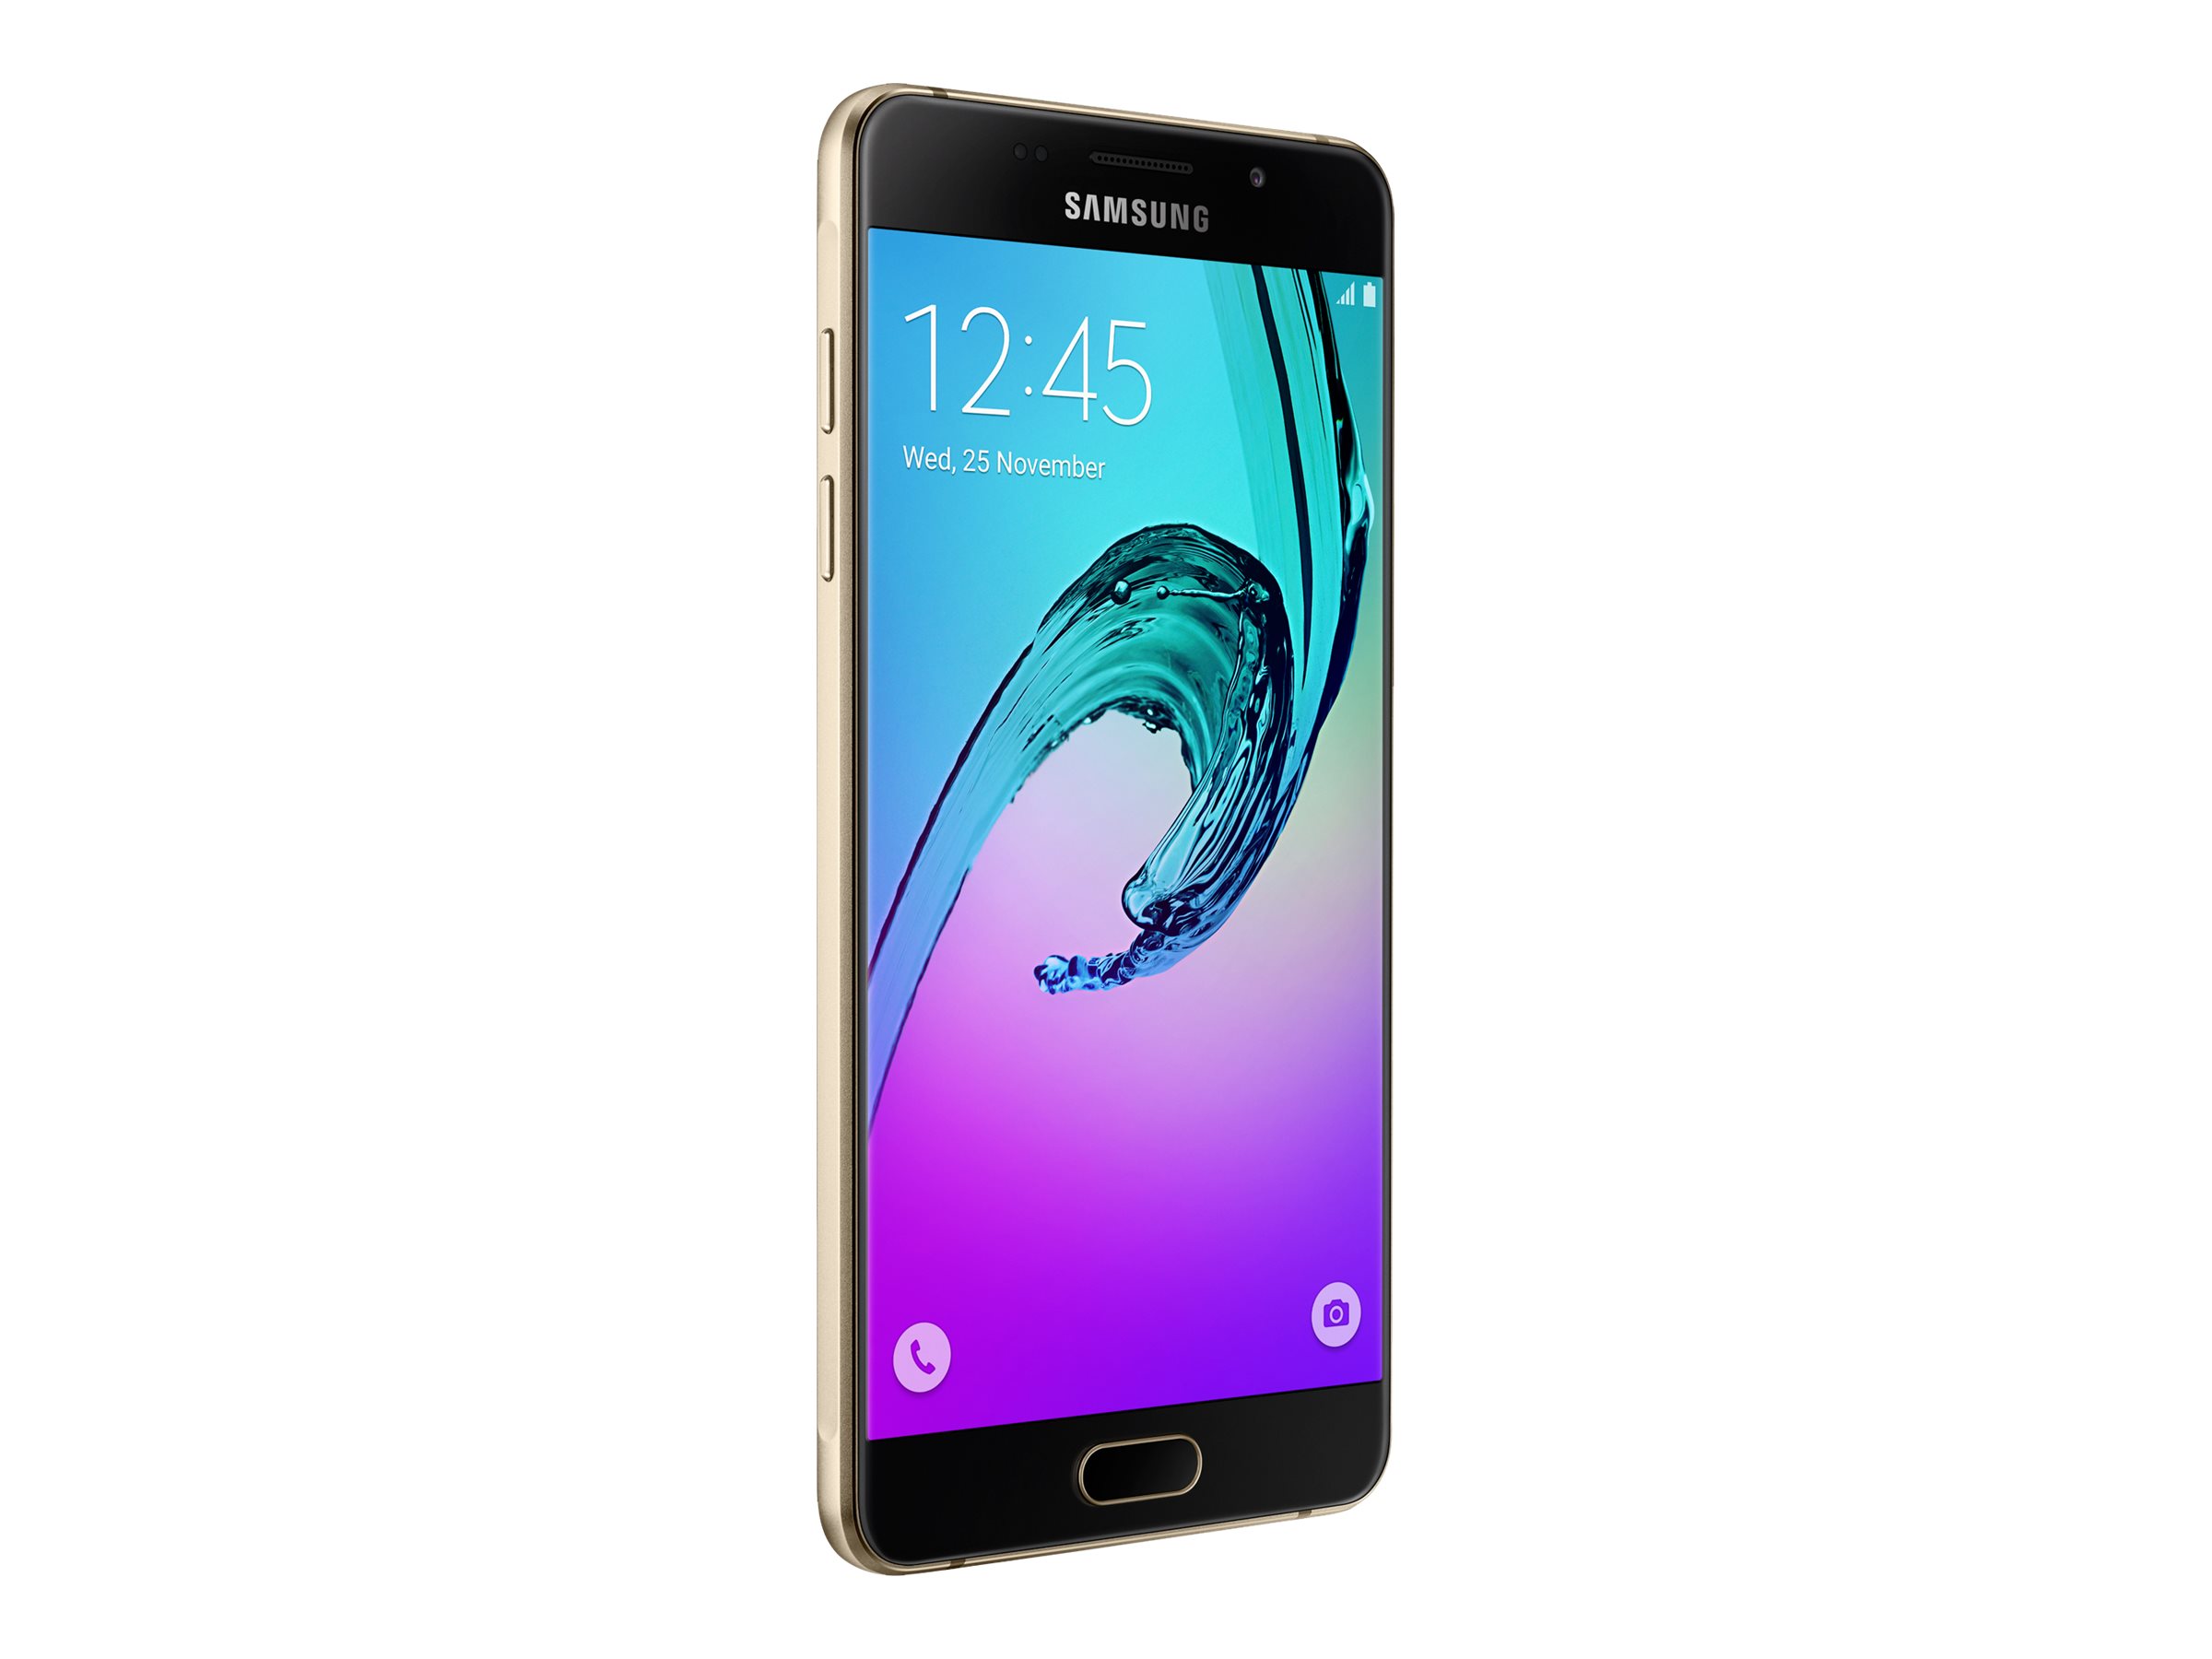 Samsung Galaxy A5 (2016) - 4G smartphone - dual-SIM - RAM 2 GB / Internal Memory 16 GB - microSD slot - OLED display - 5.2" - 1920 x 1080 pixels - rear camera 13 MP - front camera 5 MP - gold - image 3 of 6